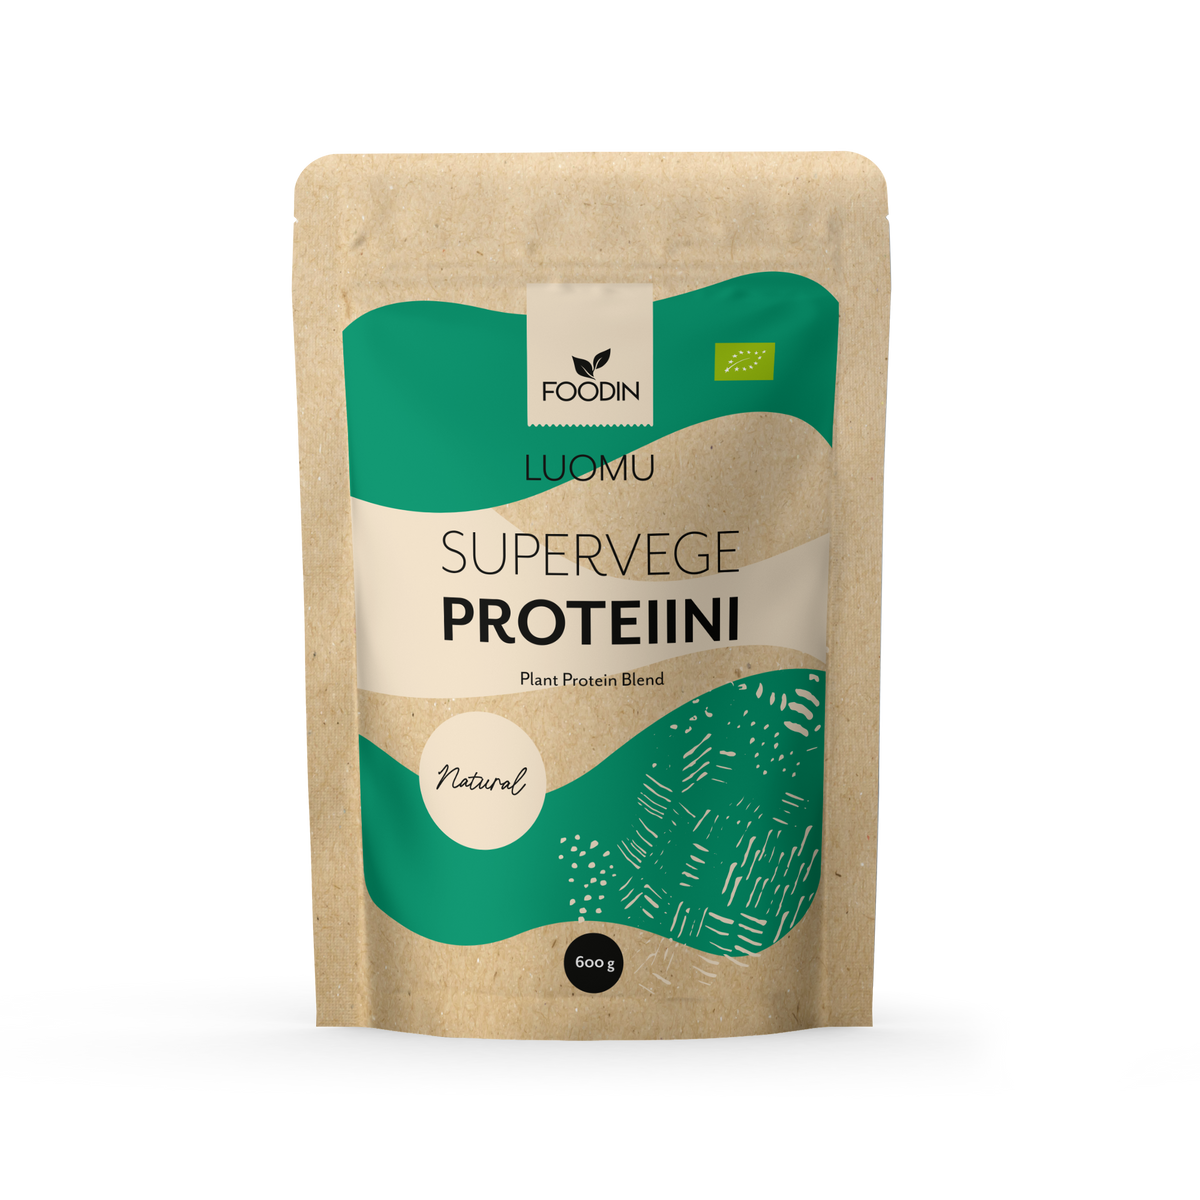 Foodin Luomu Supervege Proteiini Natural 600 g